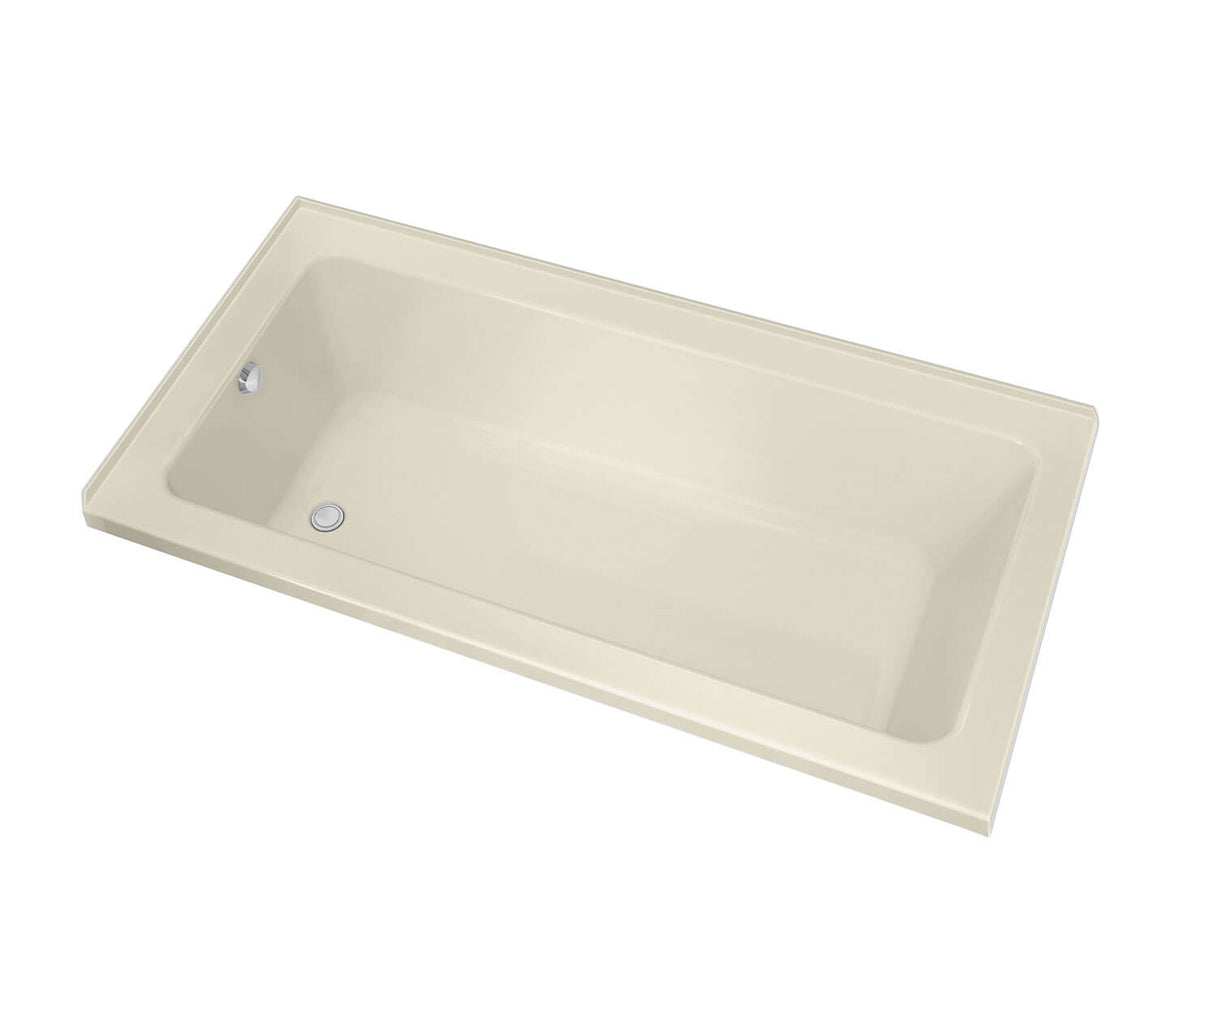 MAAX 106205-R-003-004 Pose 6632 IF Acrylic Corner Left Right-Hand Drain Whirlpool Bathtub in Bone